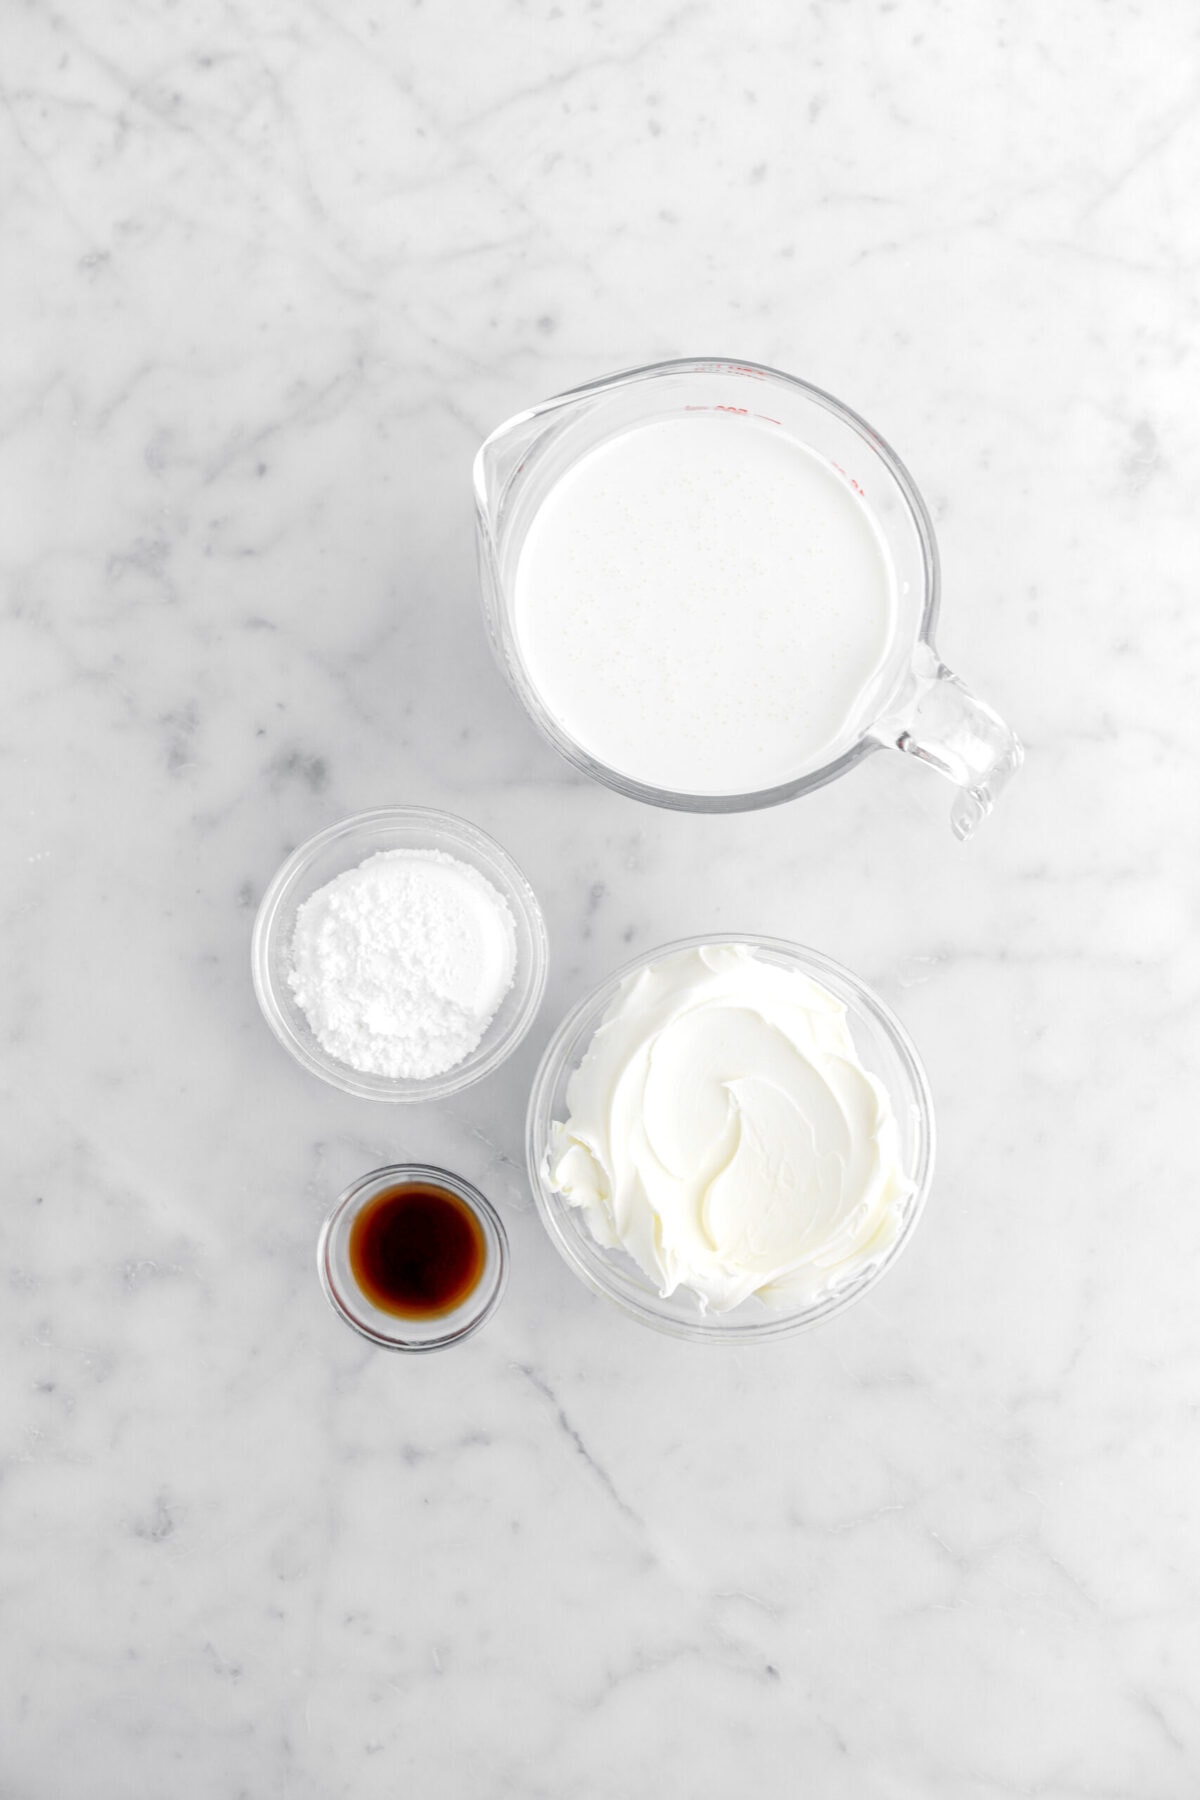 heavy cream, powdered sugar, vanilla, and mascarpone on marble surface.